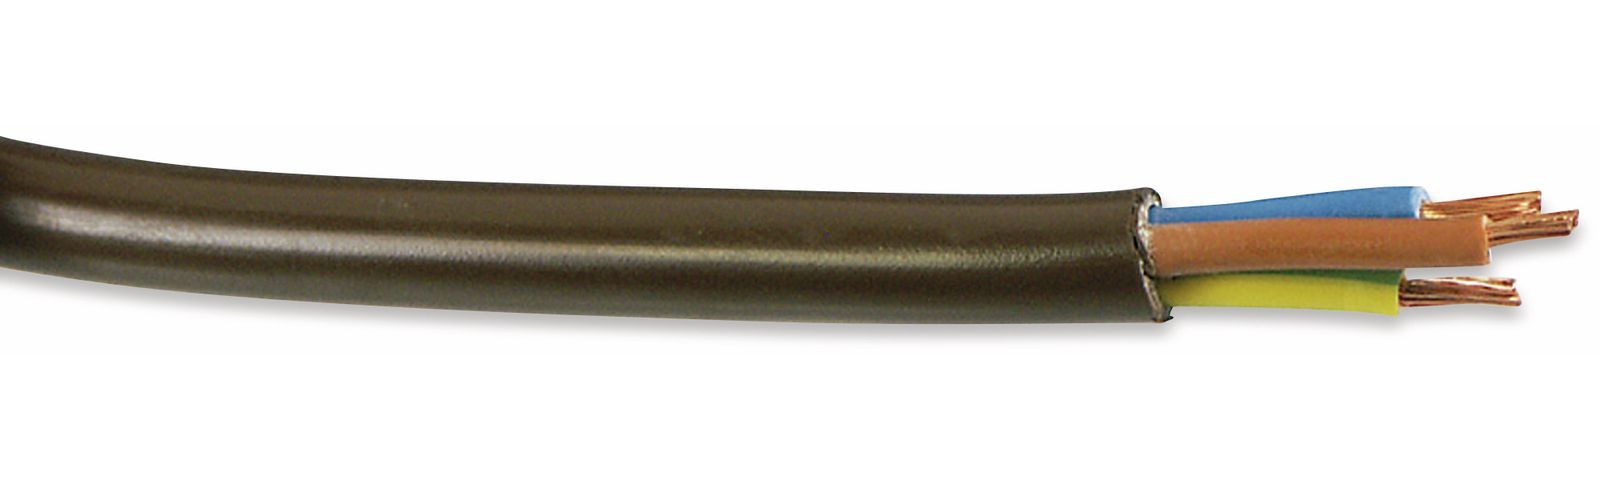 RAUTRONIC PVC-Schlauchleitung H03VV-F, 3G0,75, 25 m, braun von Rautronic